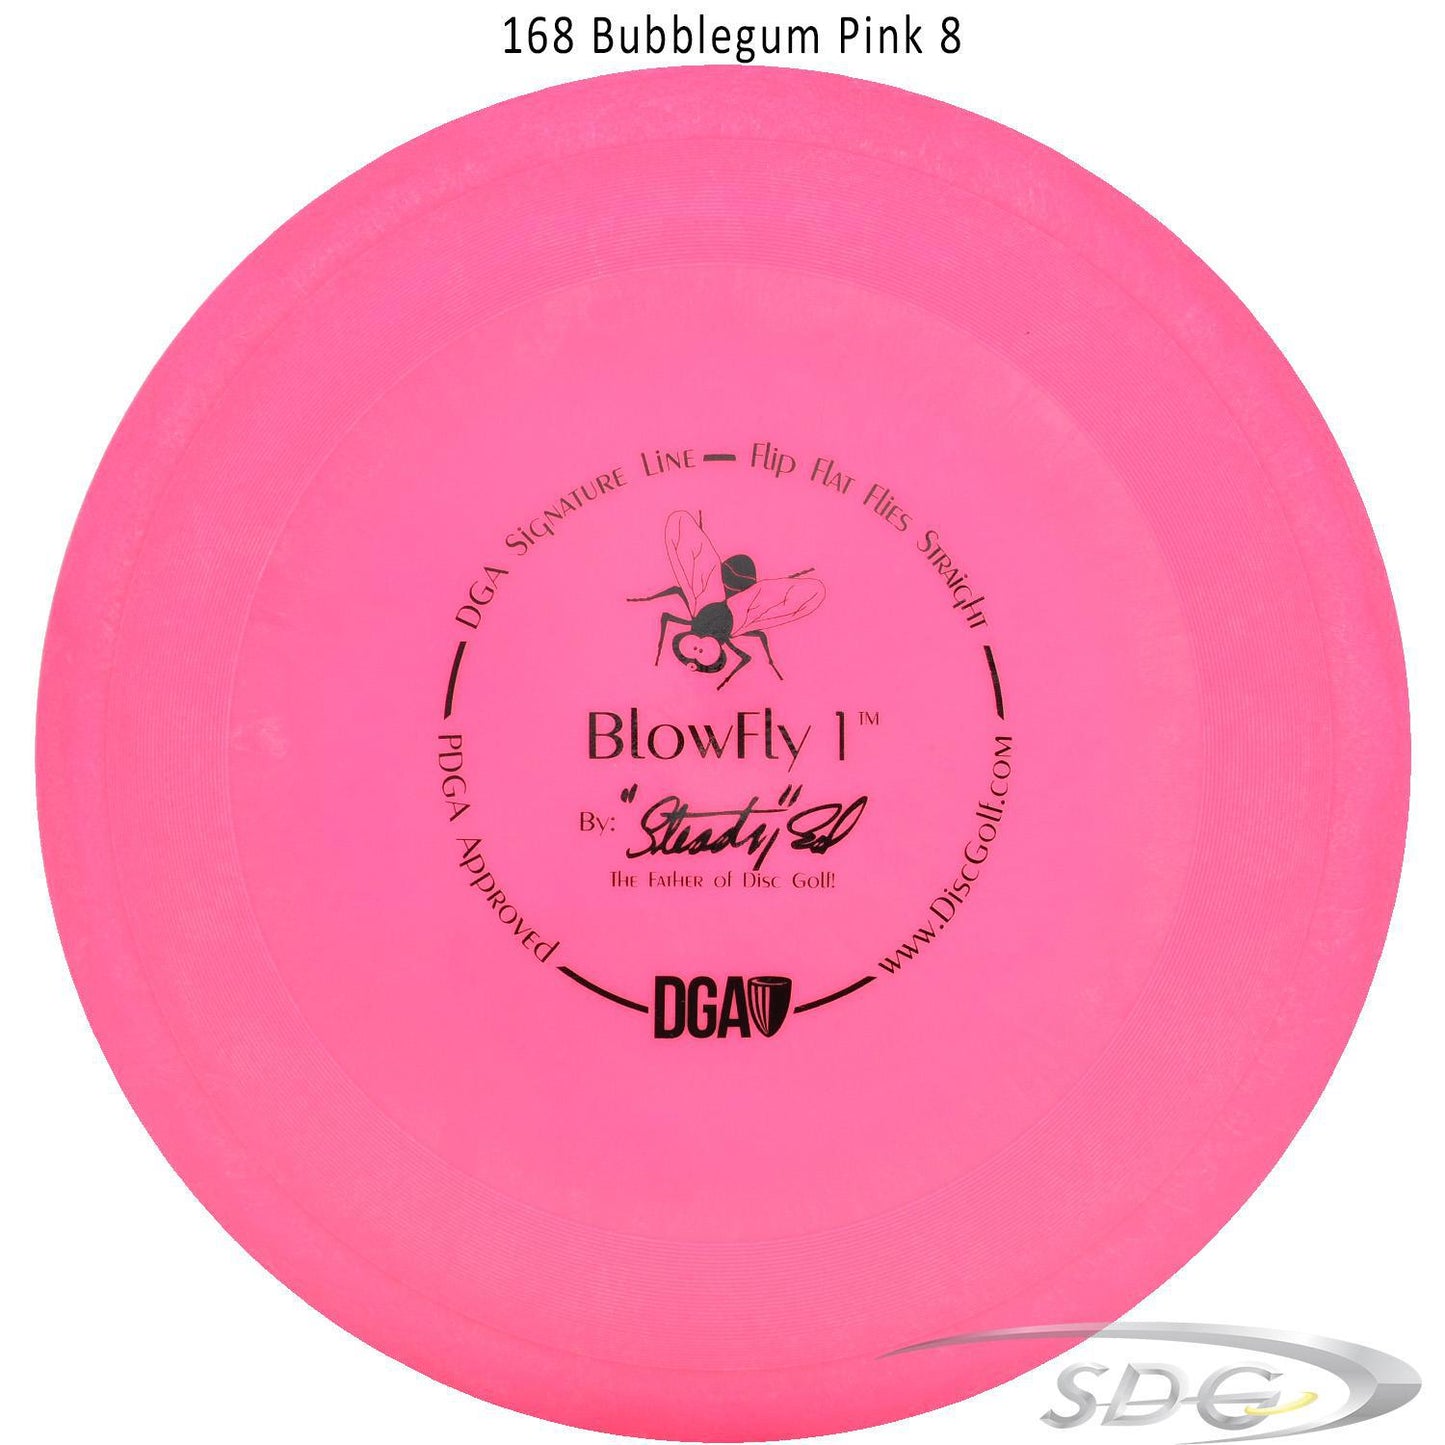 dga-signature-line-blowfly-1-disc-golf-putter 168 Bubblegum Pink 8 